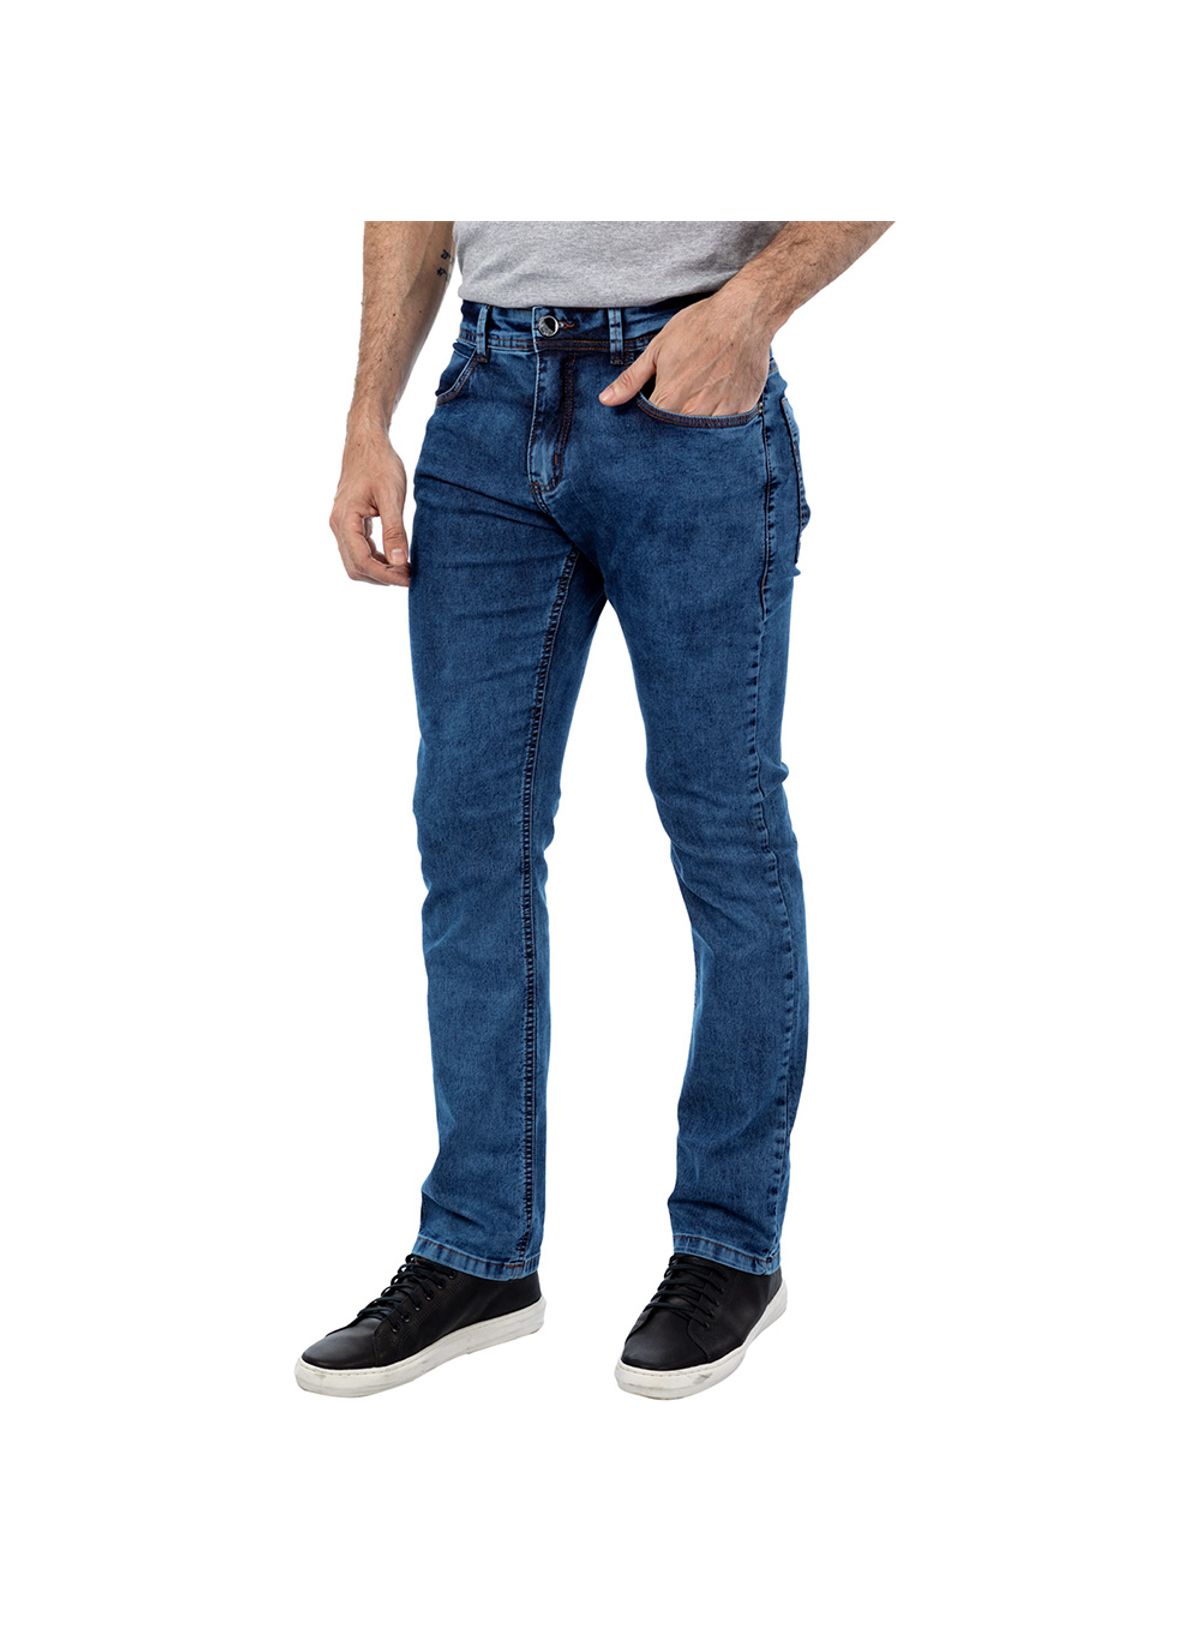 jaqueta jeans tamanho 14